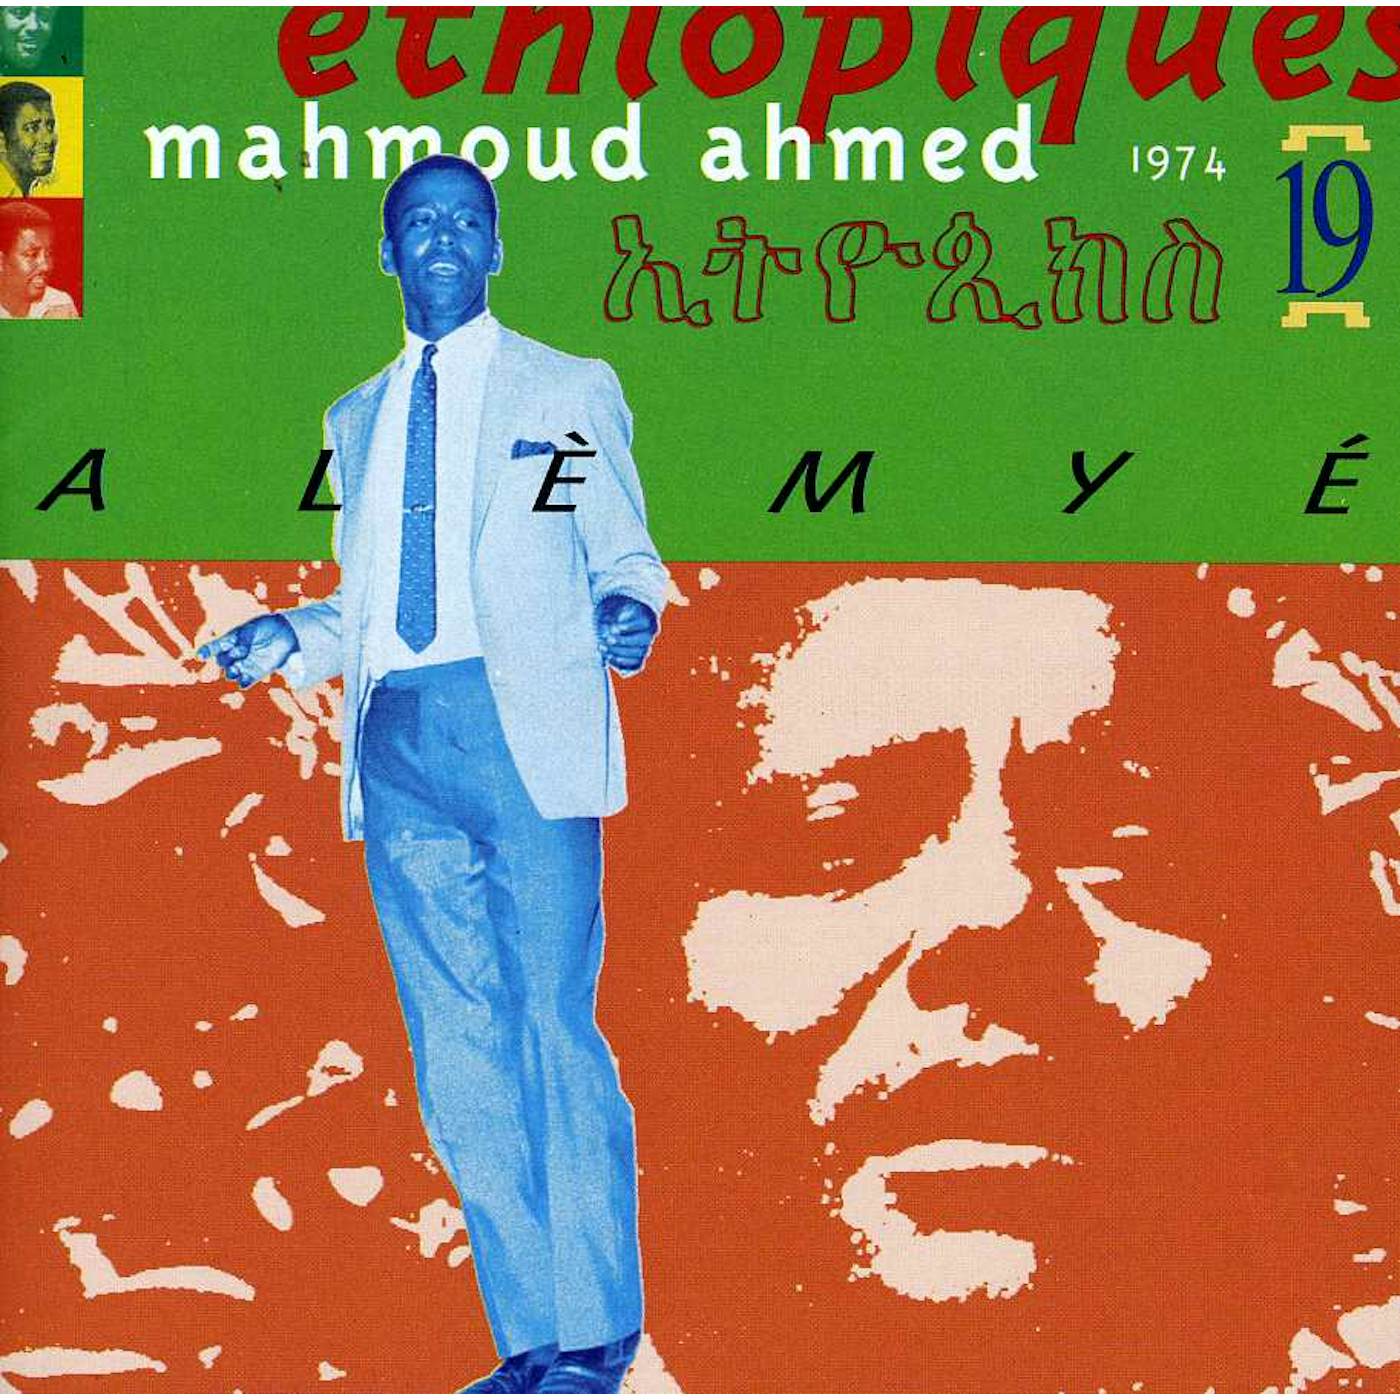 Mahmoud Ahmed ETHIOPIQUES 19 CD